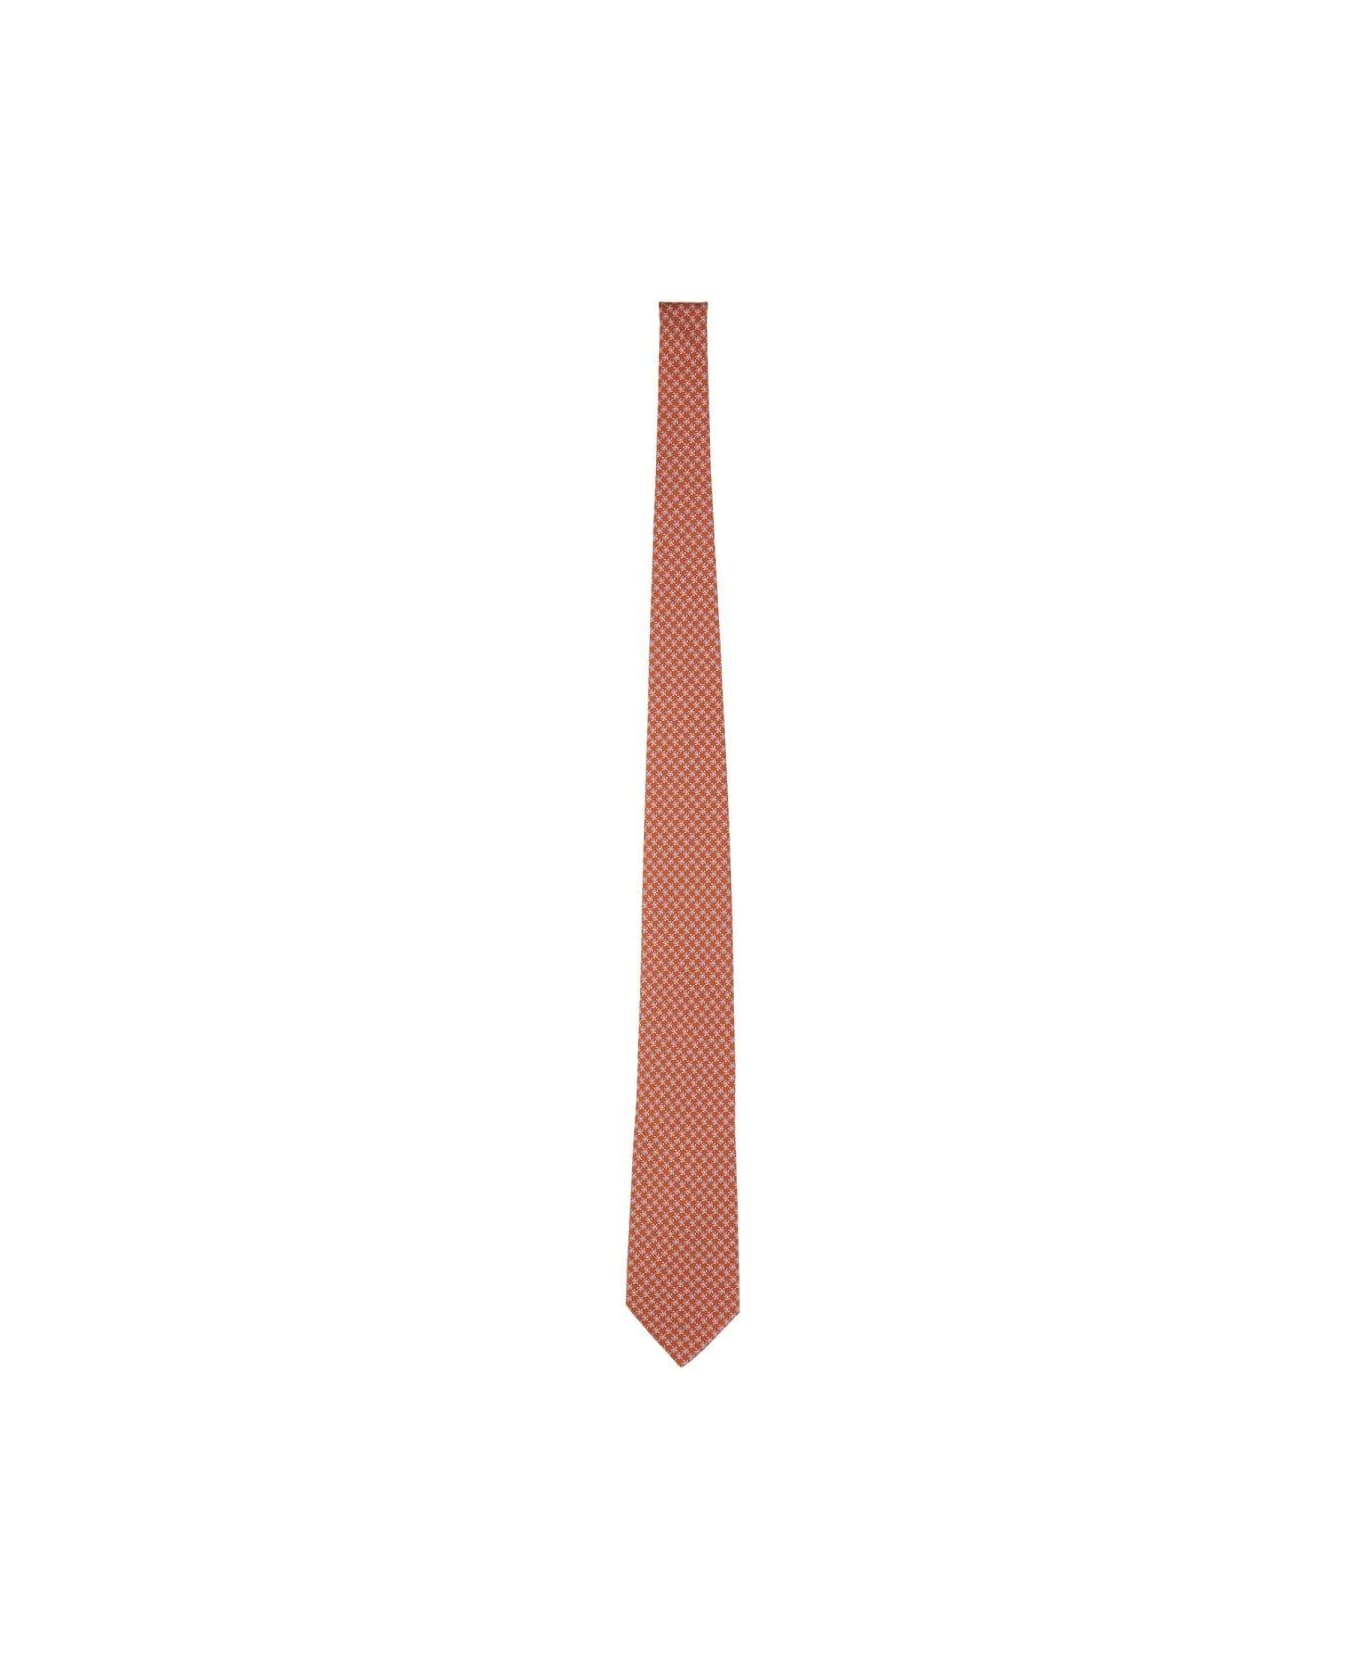 Ferragamo Micro Pattern Printed Tie - Orange ネクタイ